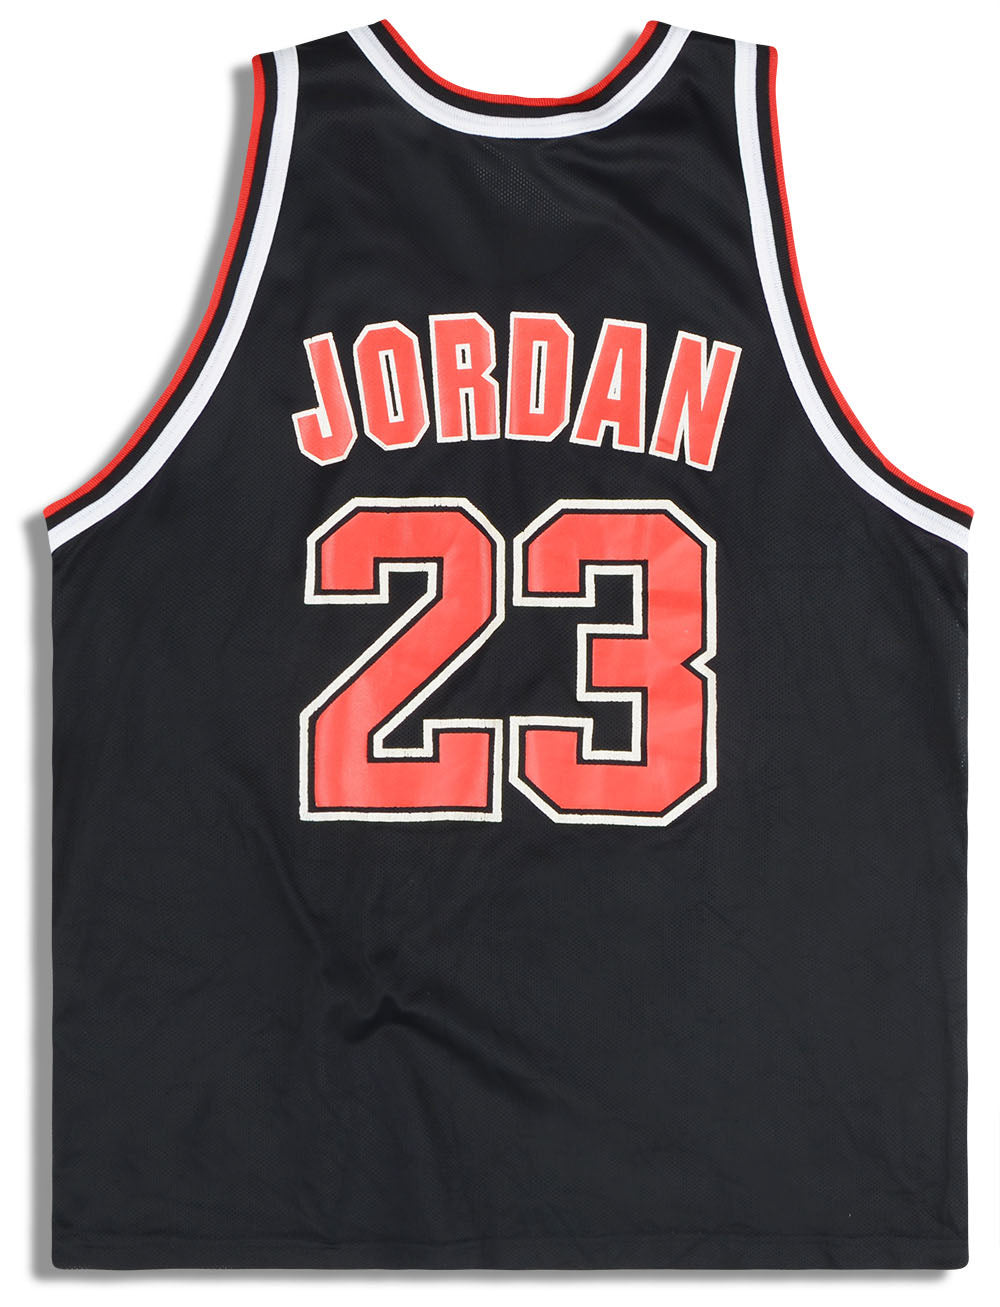 1996-97 red Champion Chicago Bulls Jordan #23 basketball jersey